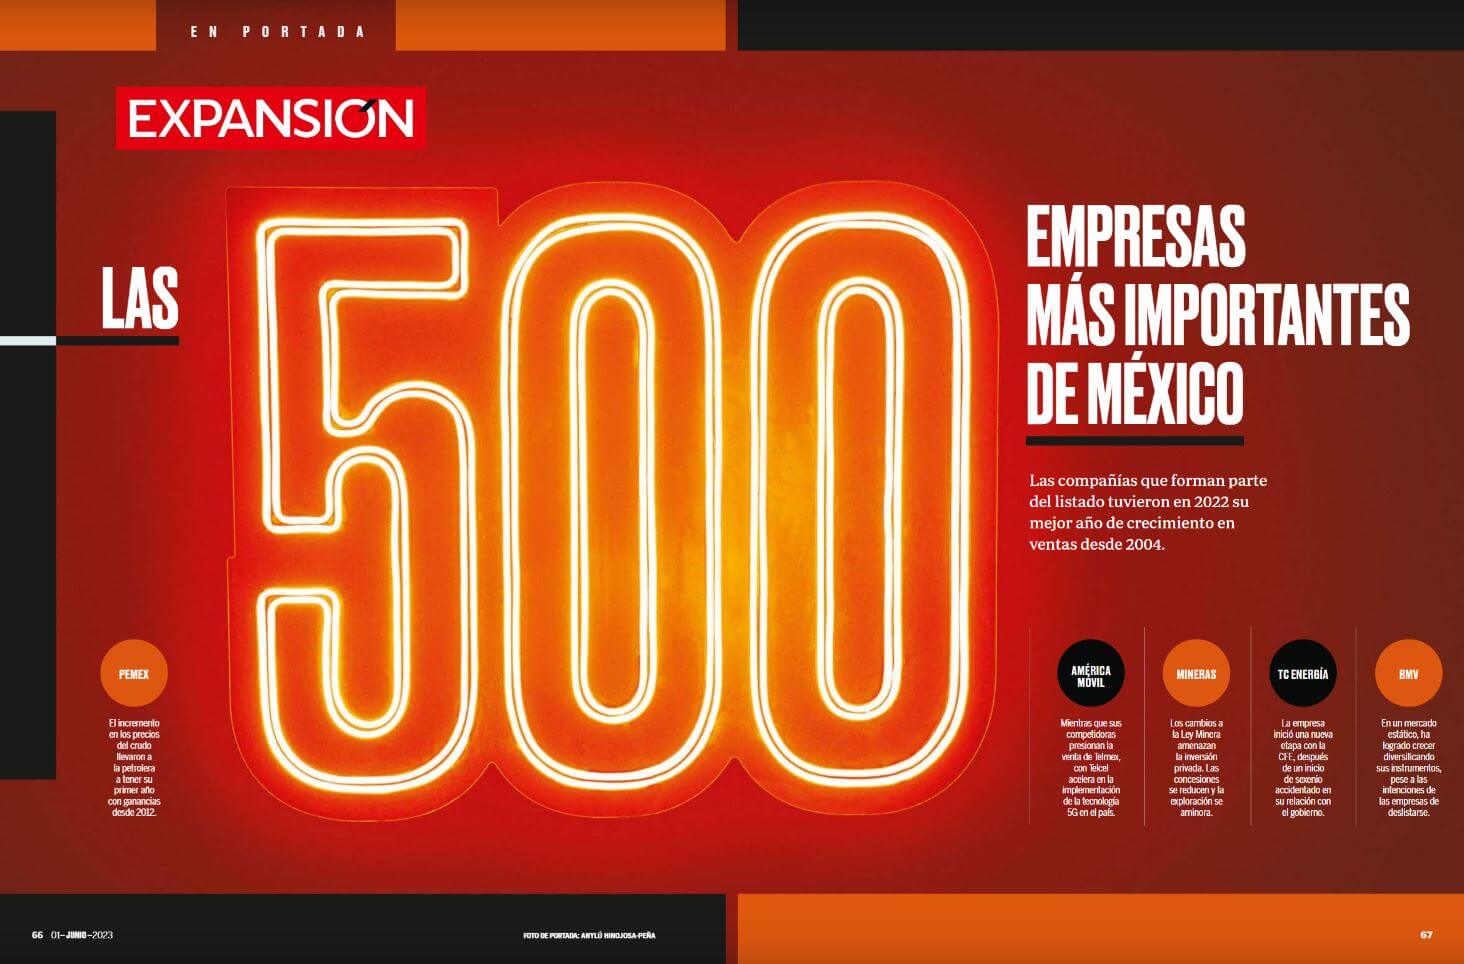 Grupo Proeza has been recognized as one of the top 100 companies in the ranking, 'Las 500 empresas más importantes de México,' published by the Expansión magazine. 